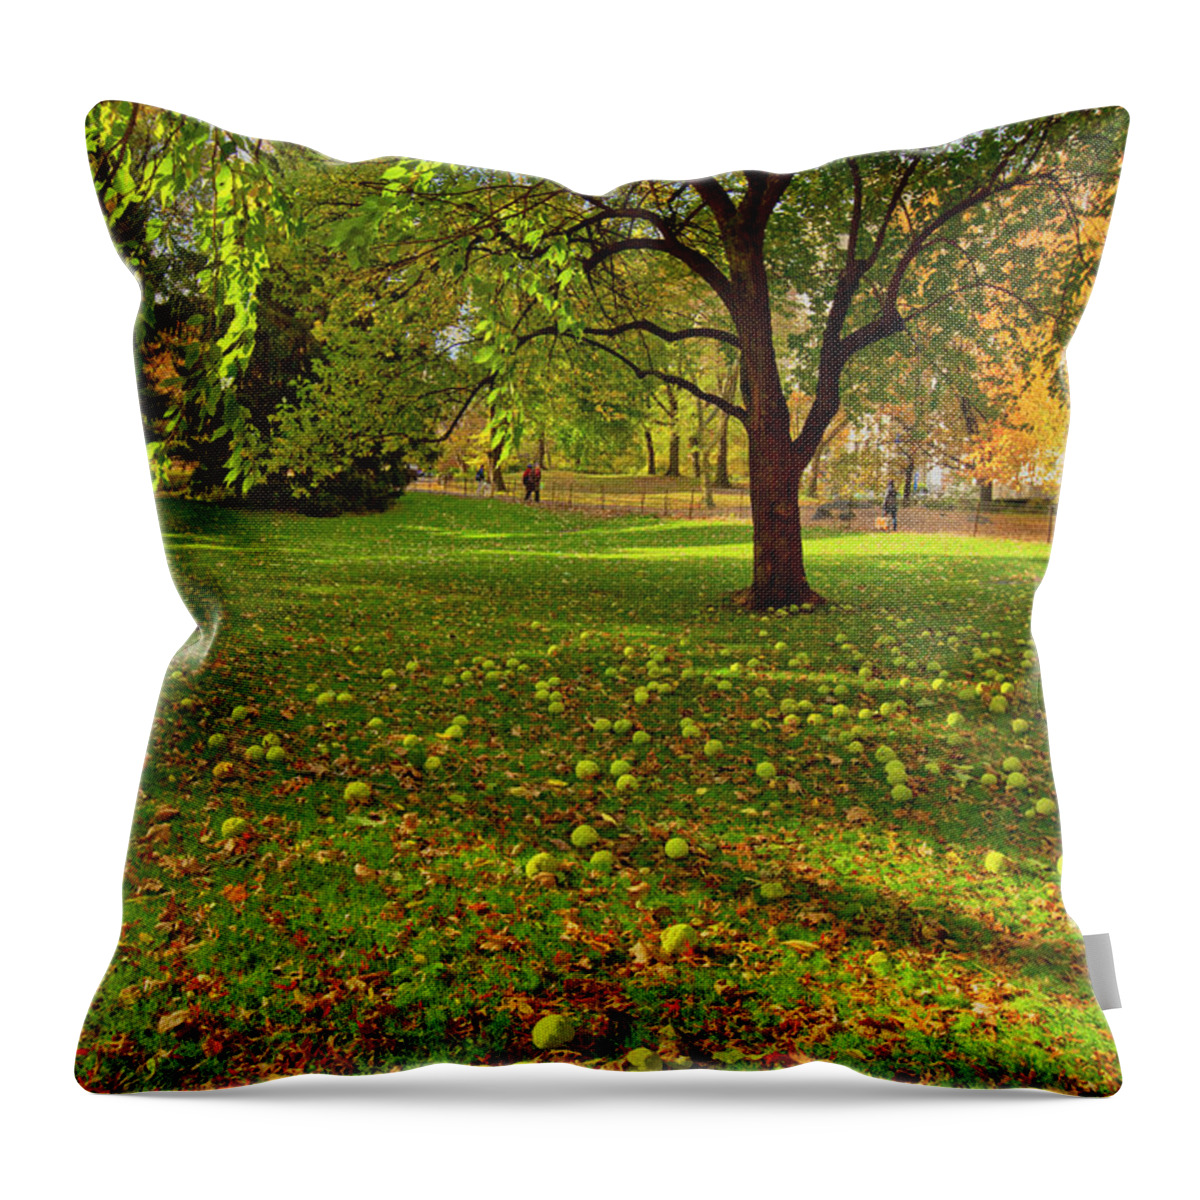 Estock Throw Pillow featuring the digital art Autumn In Central Park, Manhattan #11 by Claudia Uripos